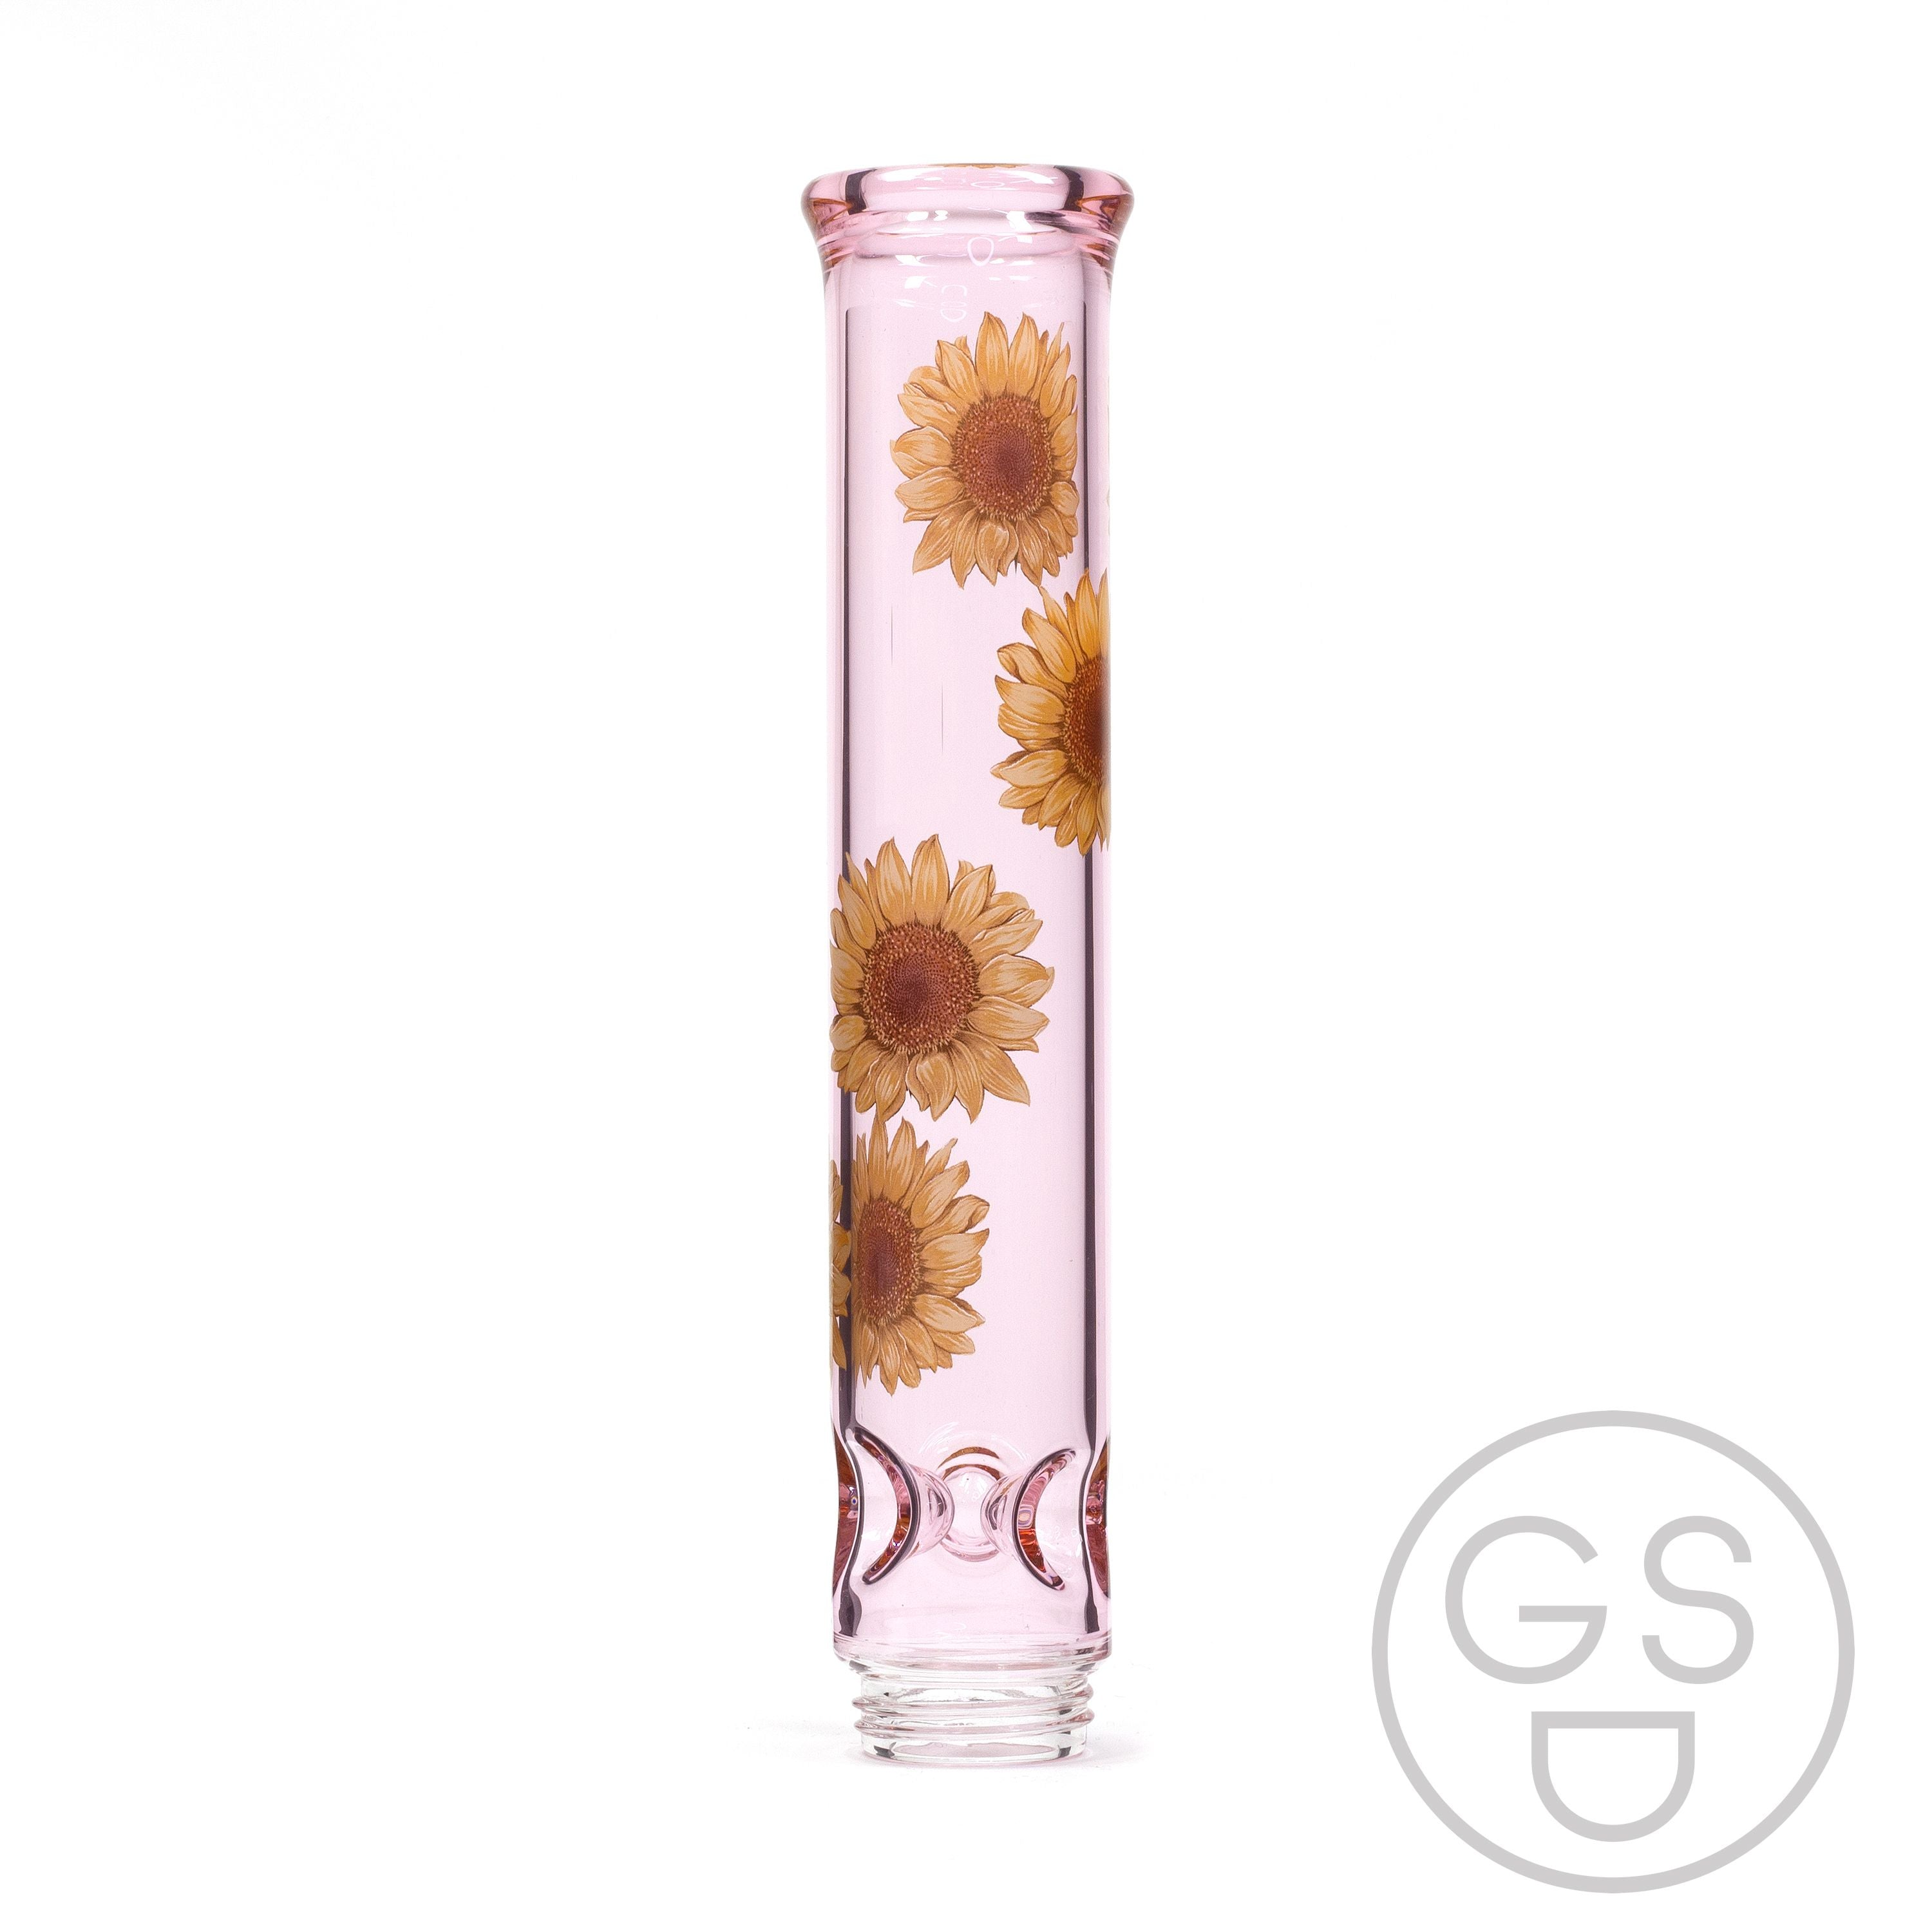 Prism Modular Waterpipe Tall Mouthpiece - Sunflower / Pink Lemonade